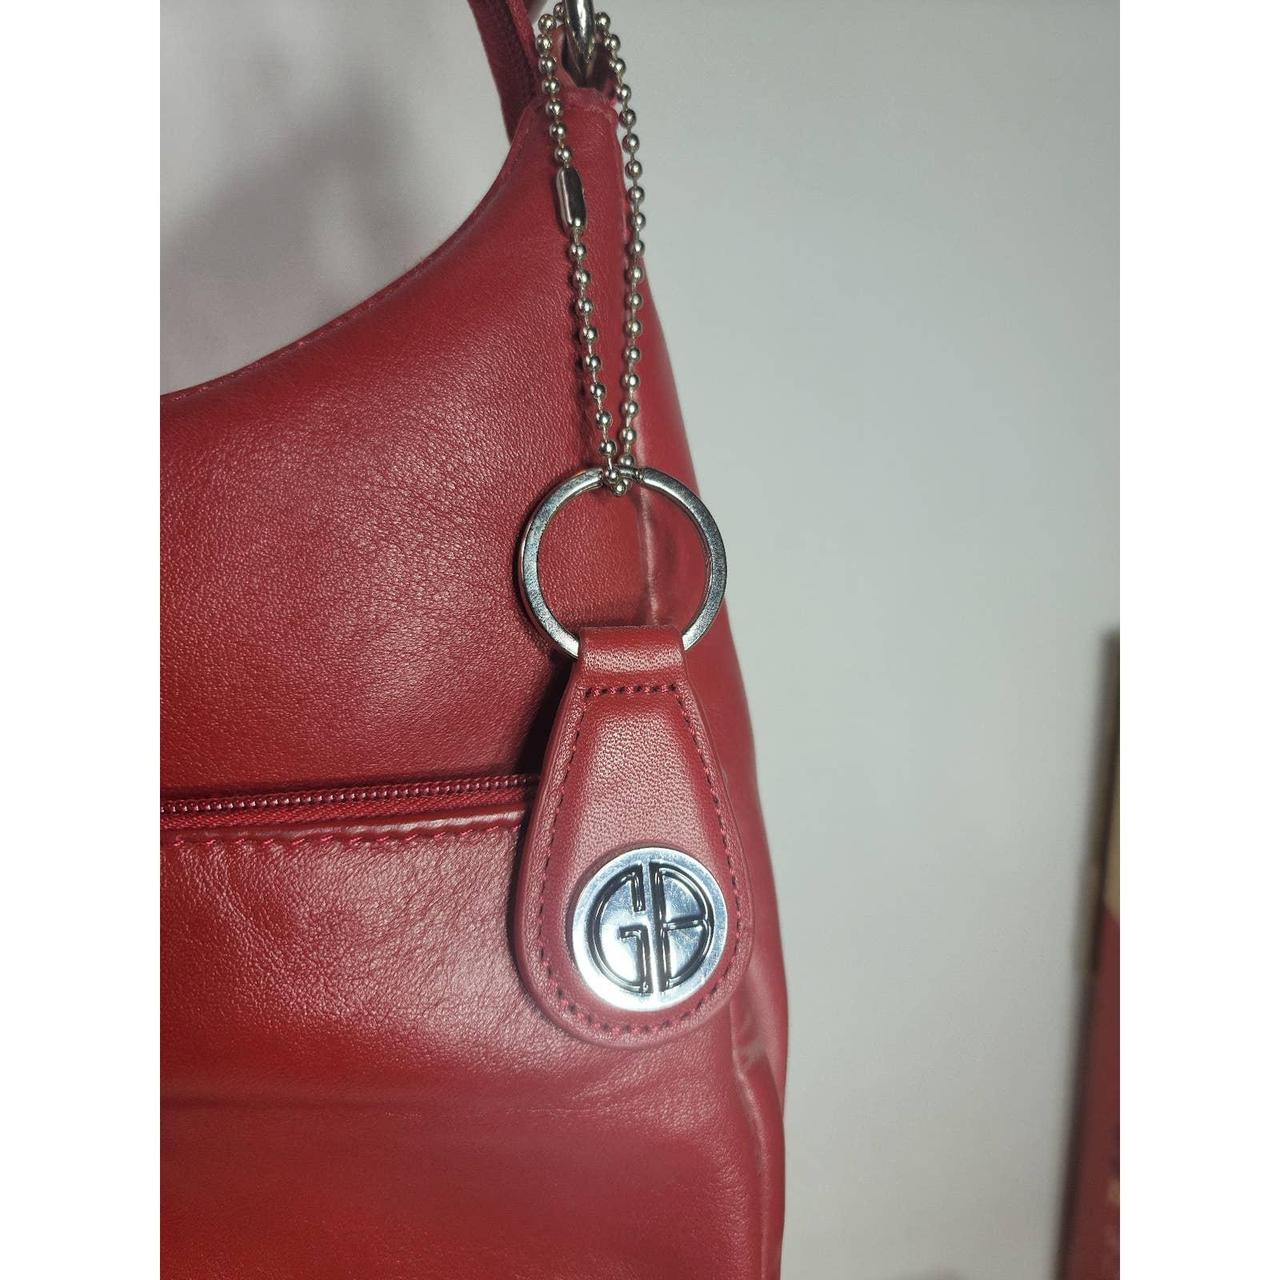 Giani Bernini, Bags, Authentic Giani Bernini Red Leather Satchel Purse